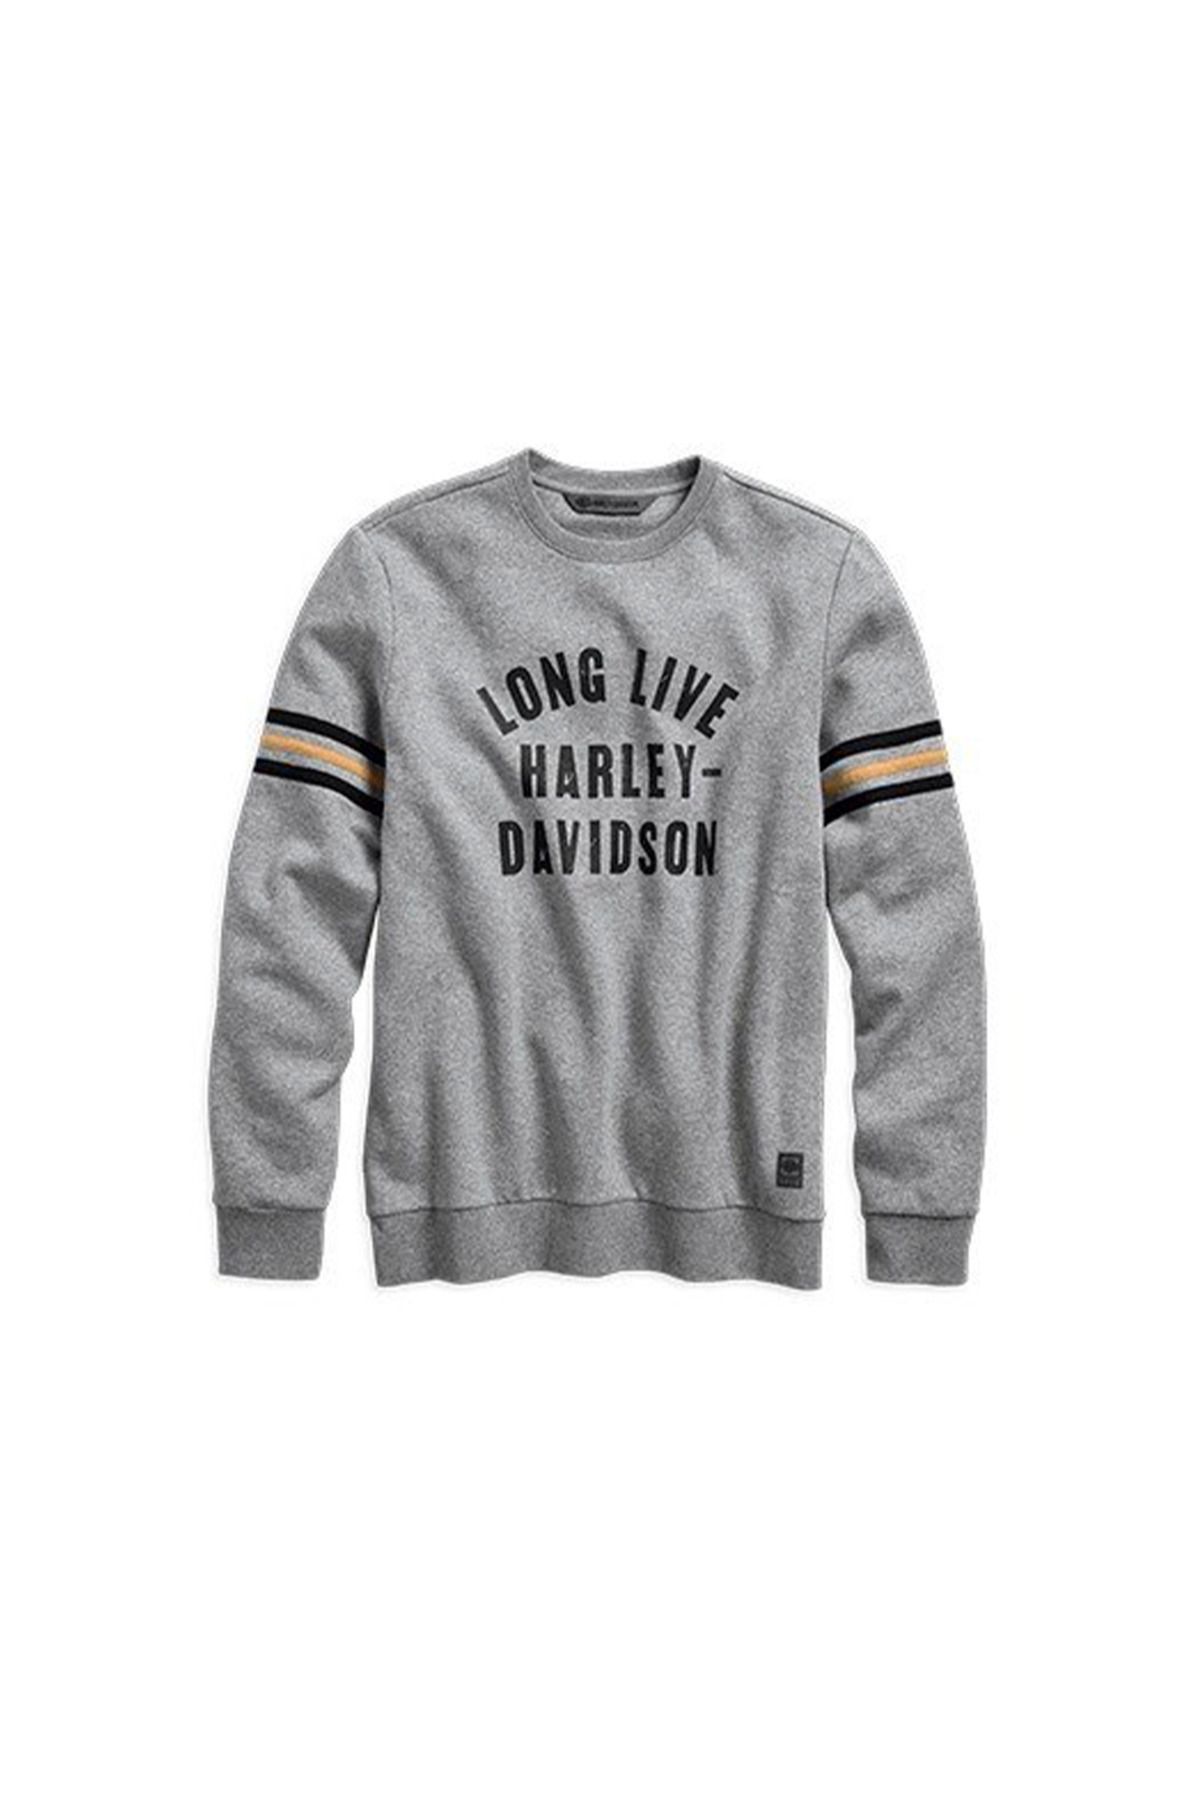 Harley Davidson Harley-davidson Sweatshirt Long Live L/s Knt Gry Erkek Sweatshirt